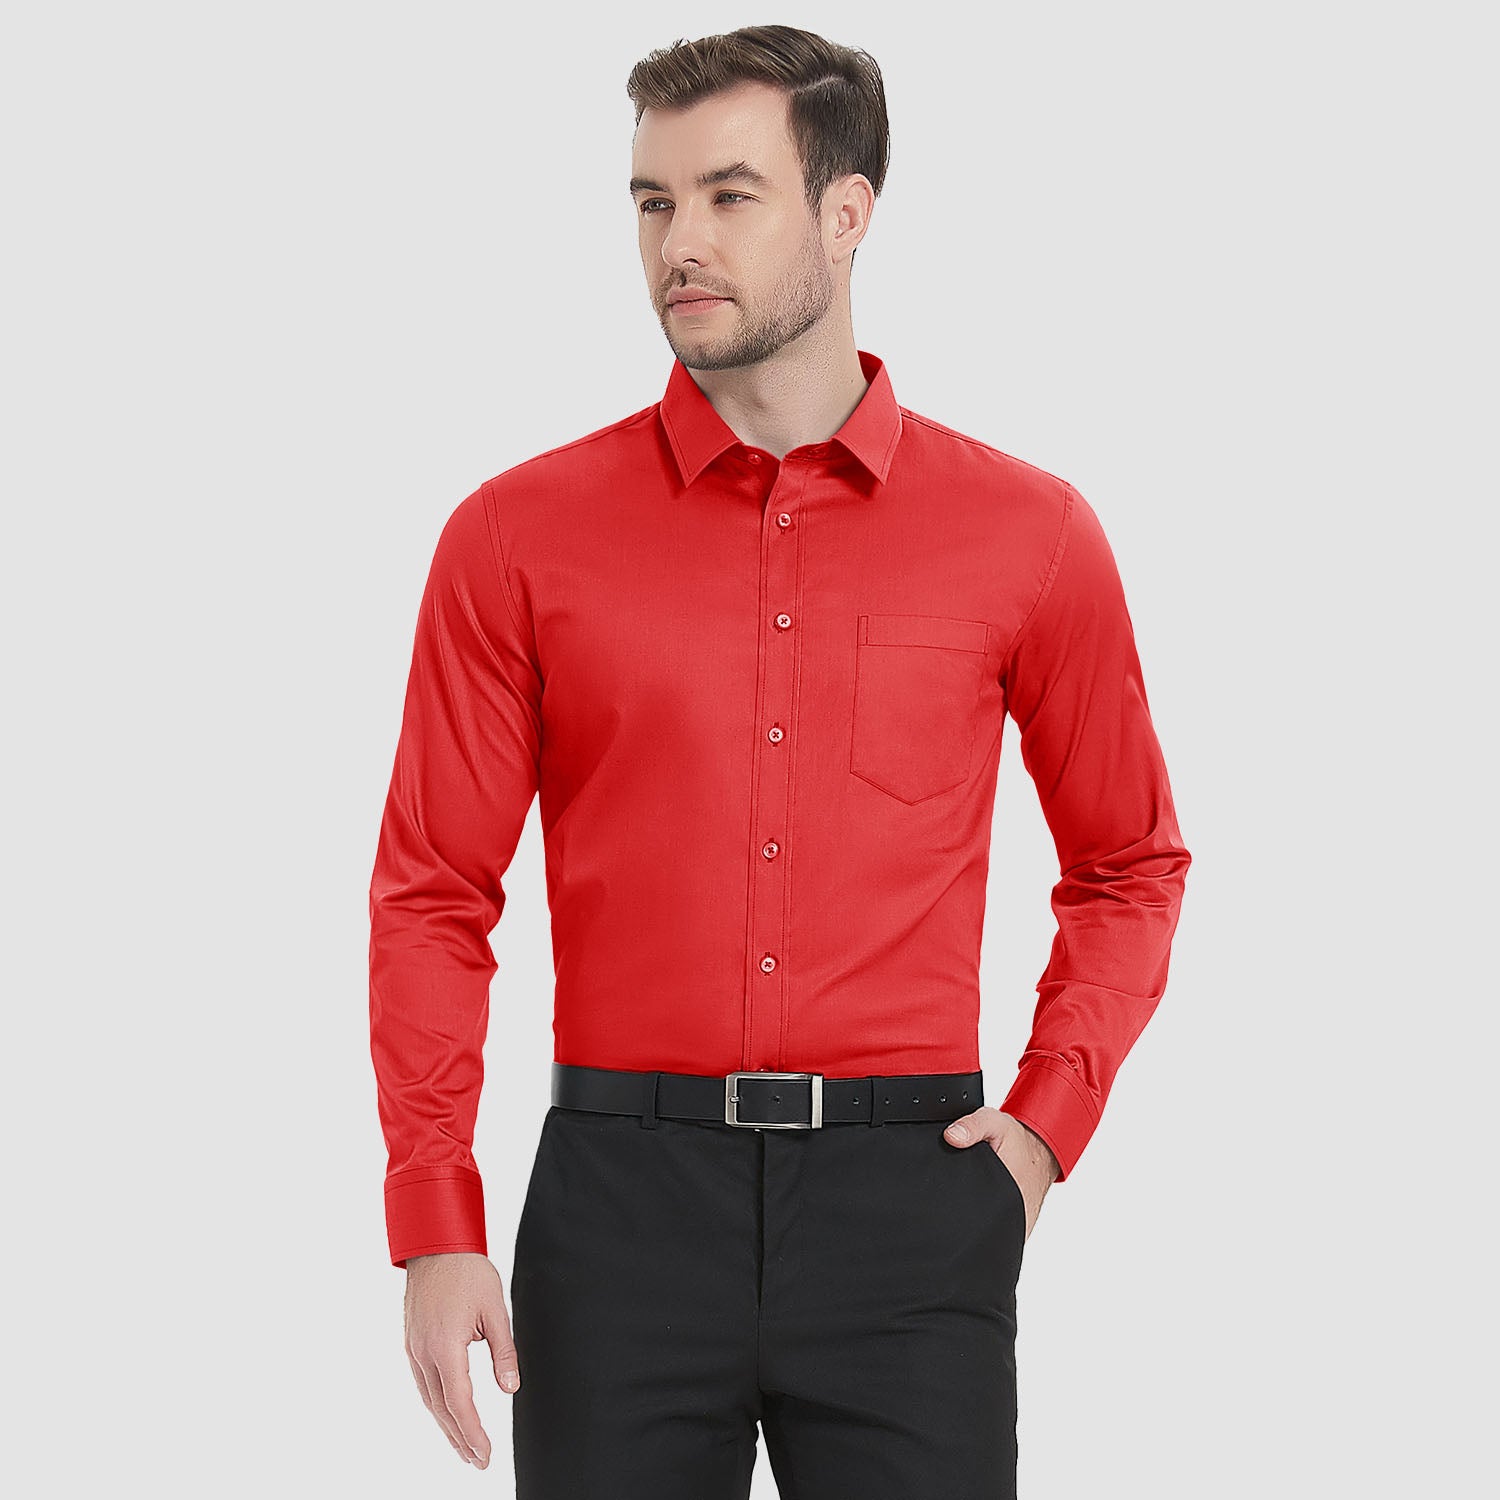 Men's Long Sleeve Shirts | Smart & Casual Shirts | MAGCOMSEN